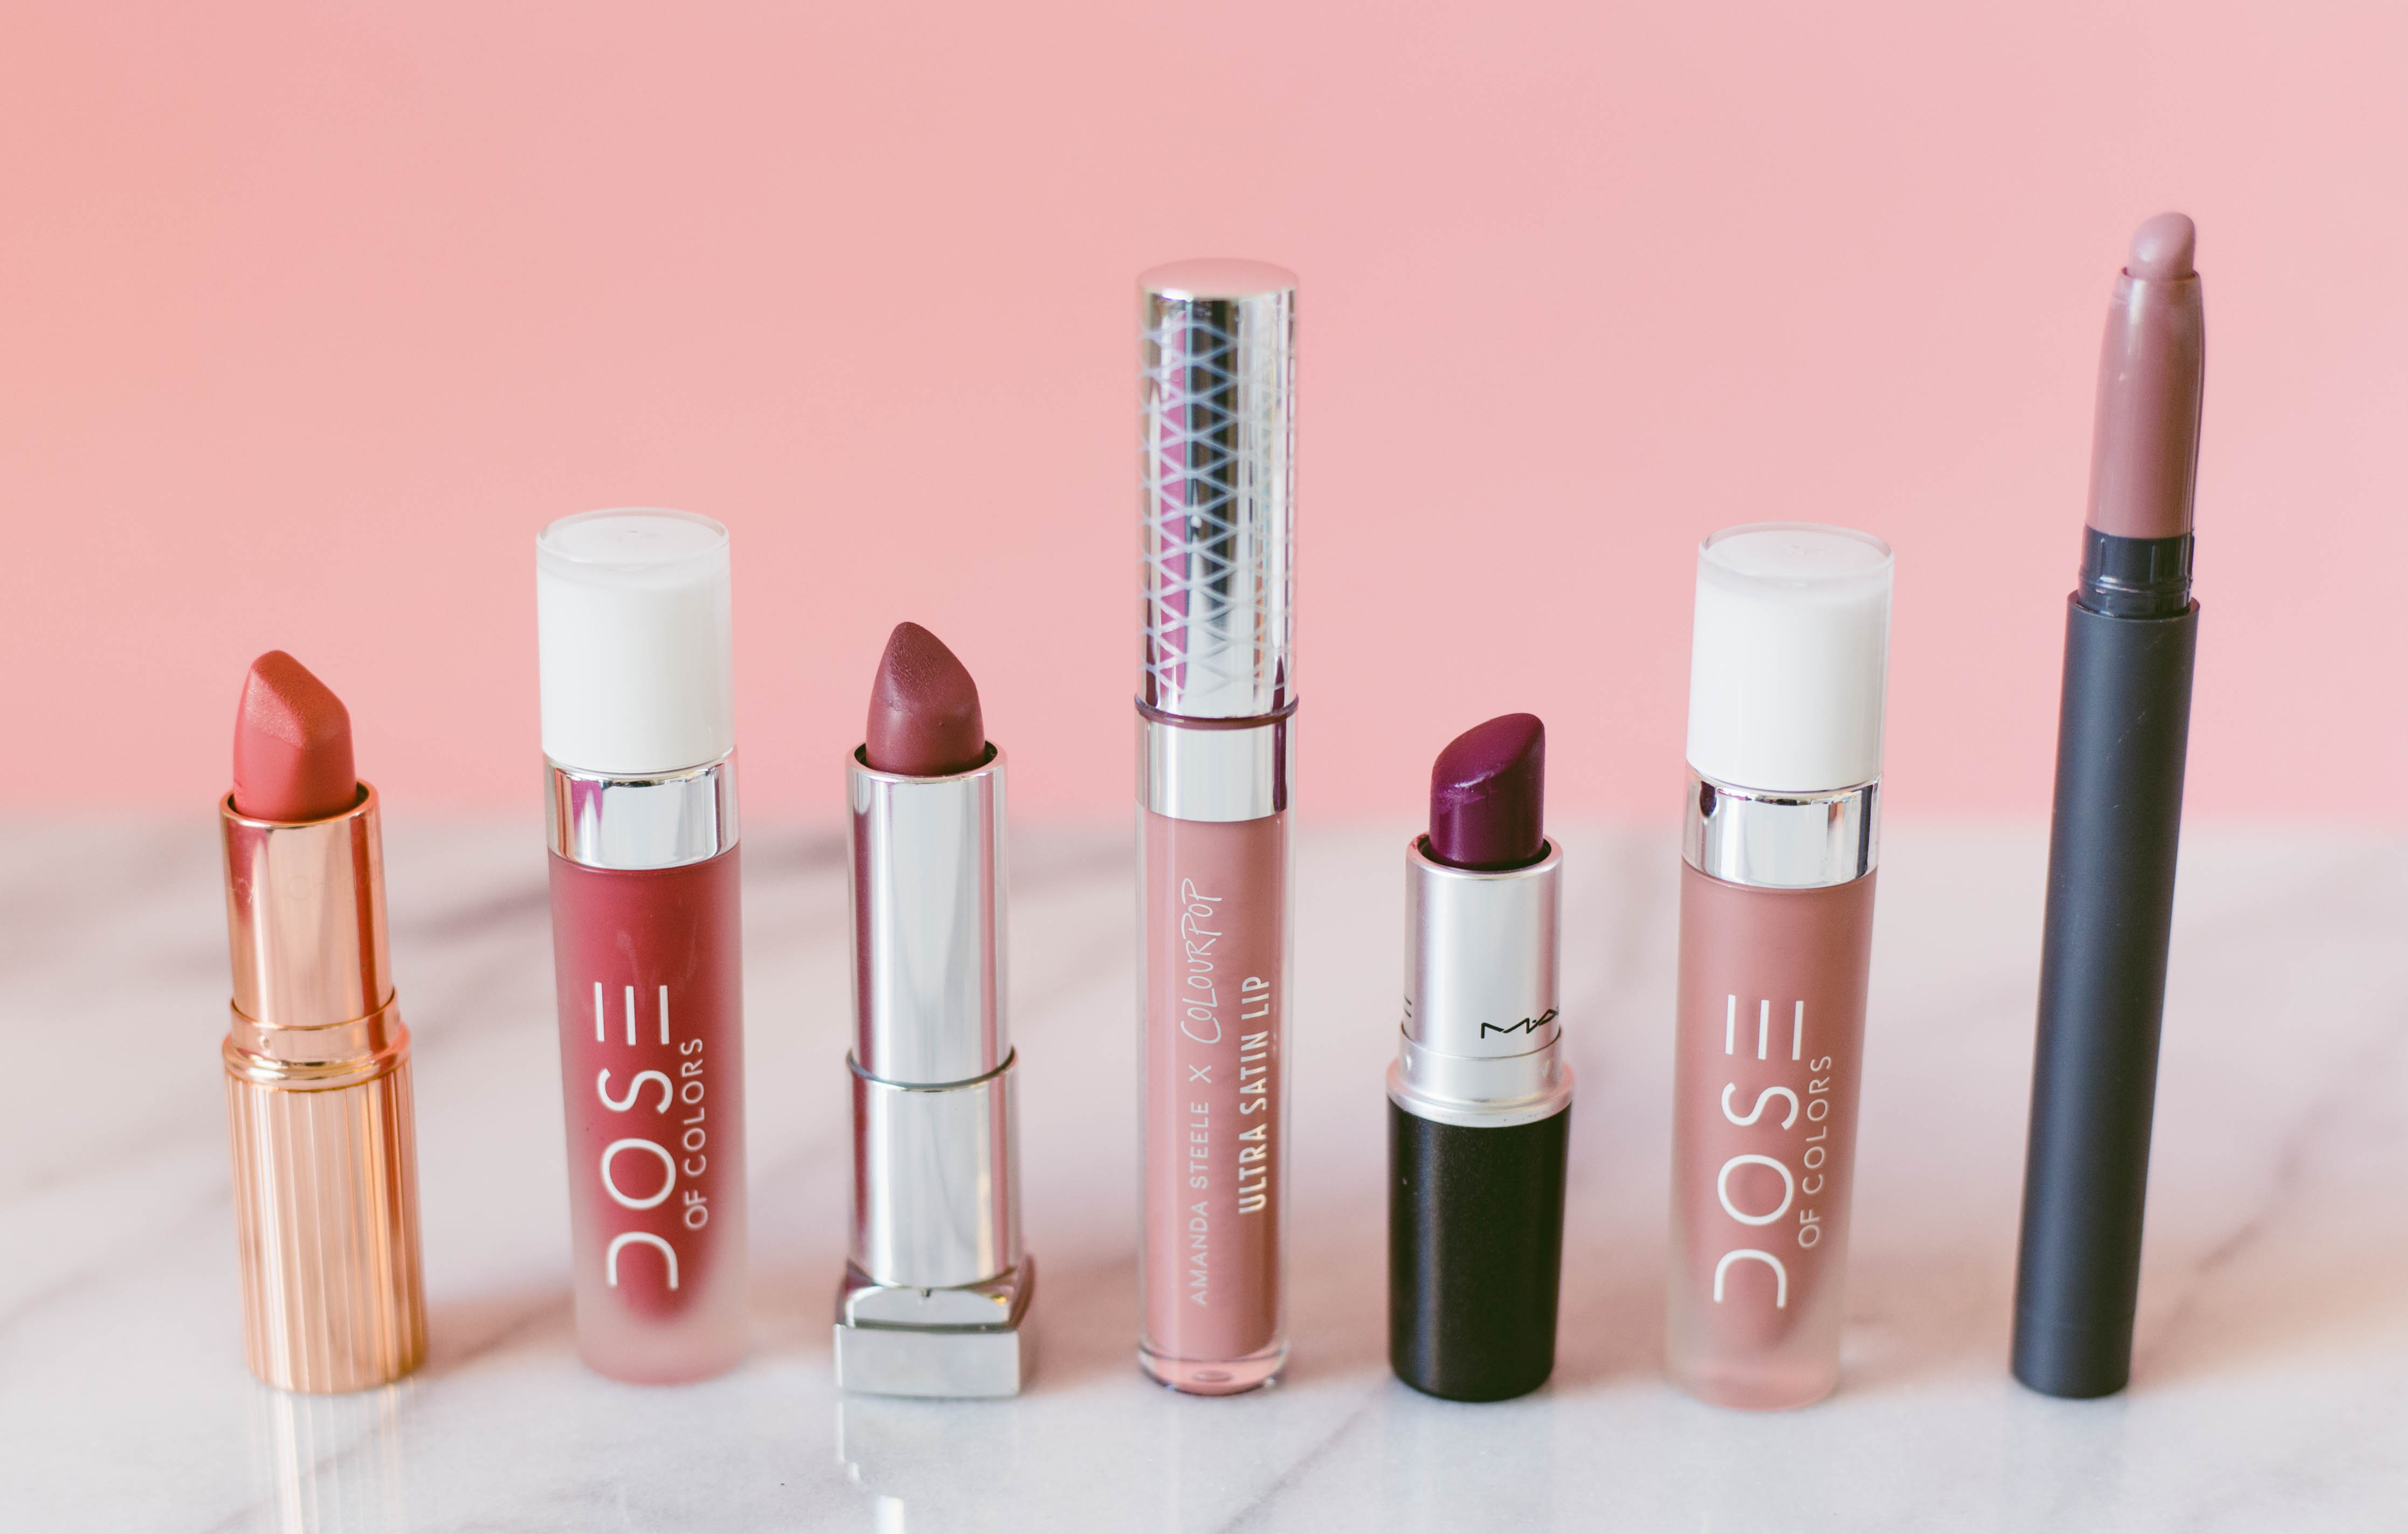 Favorite Spring Lipsticks